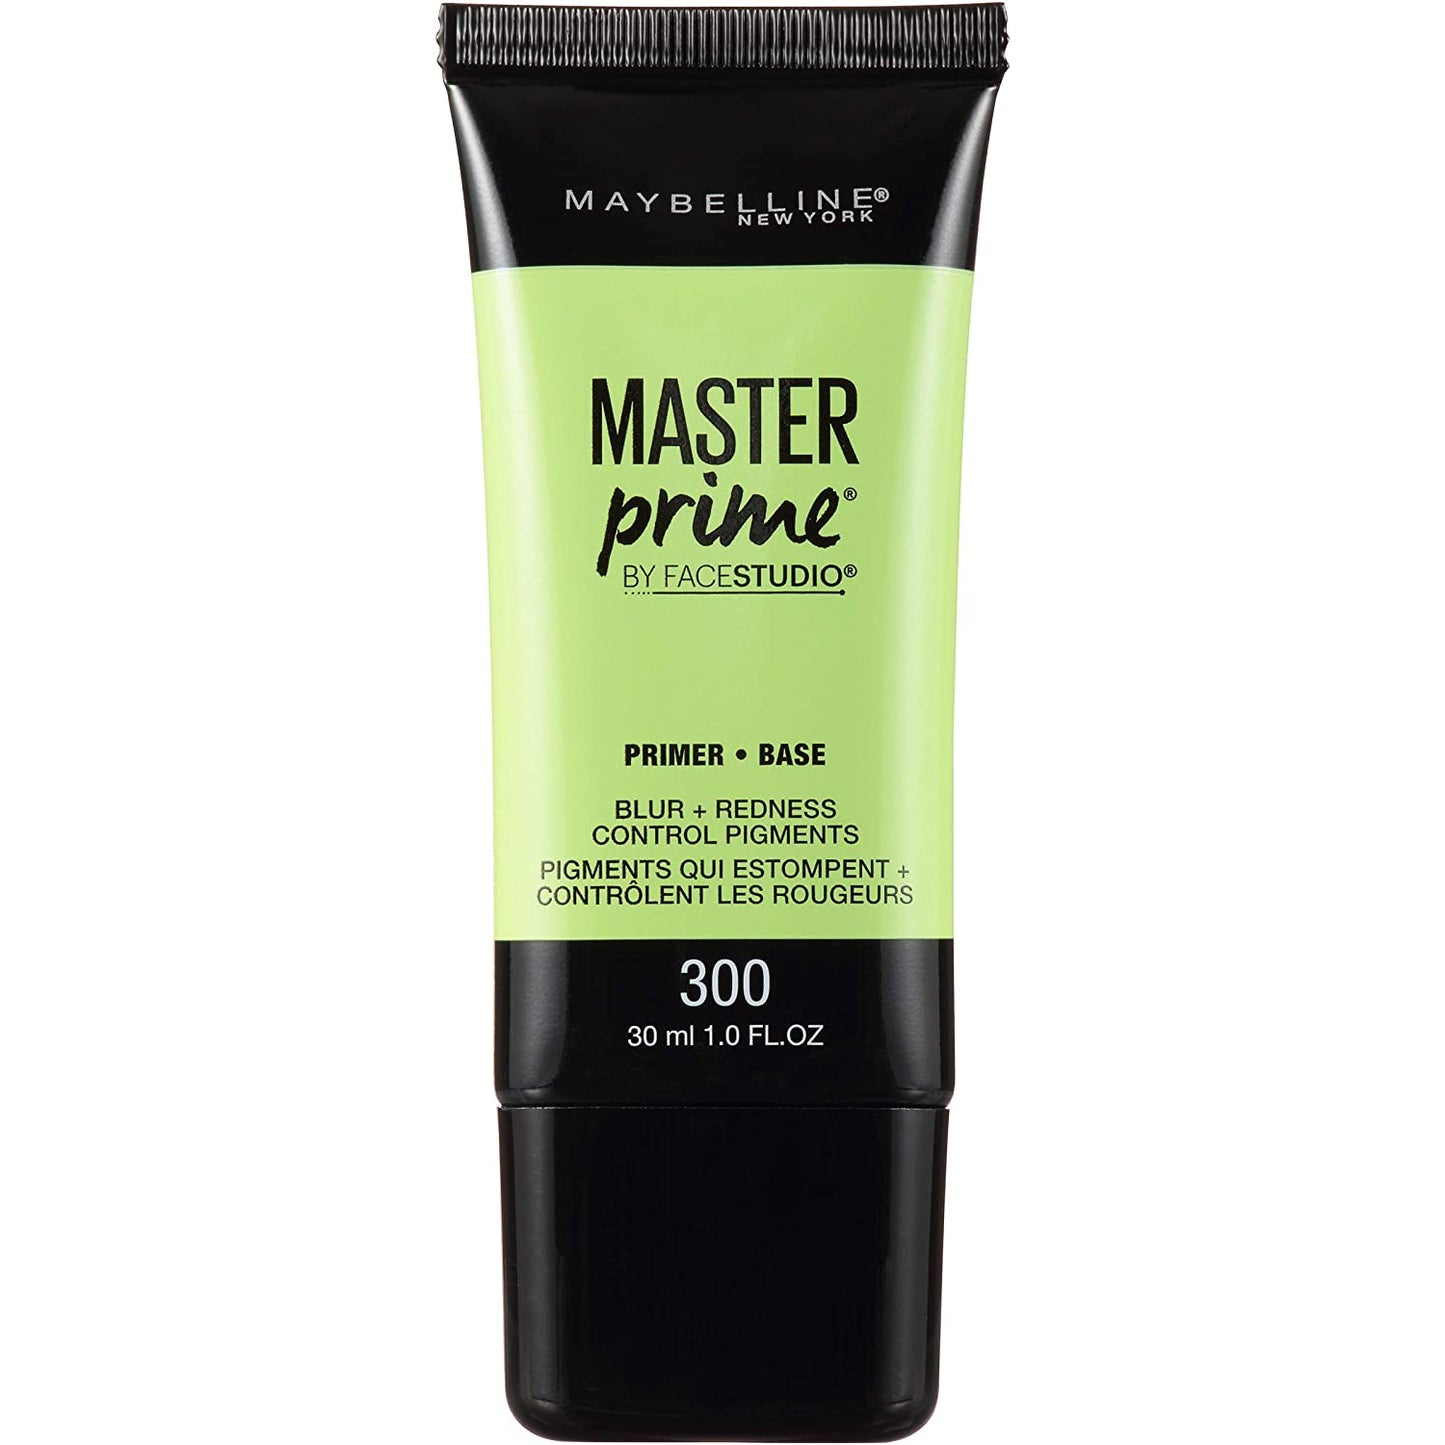 Maybelline New York Master Prime by FaceStudio Primer + Base 300 30 ml 1.0 fl oz